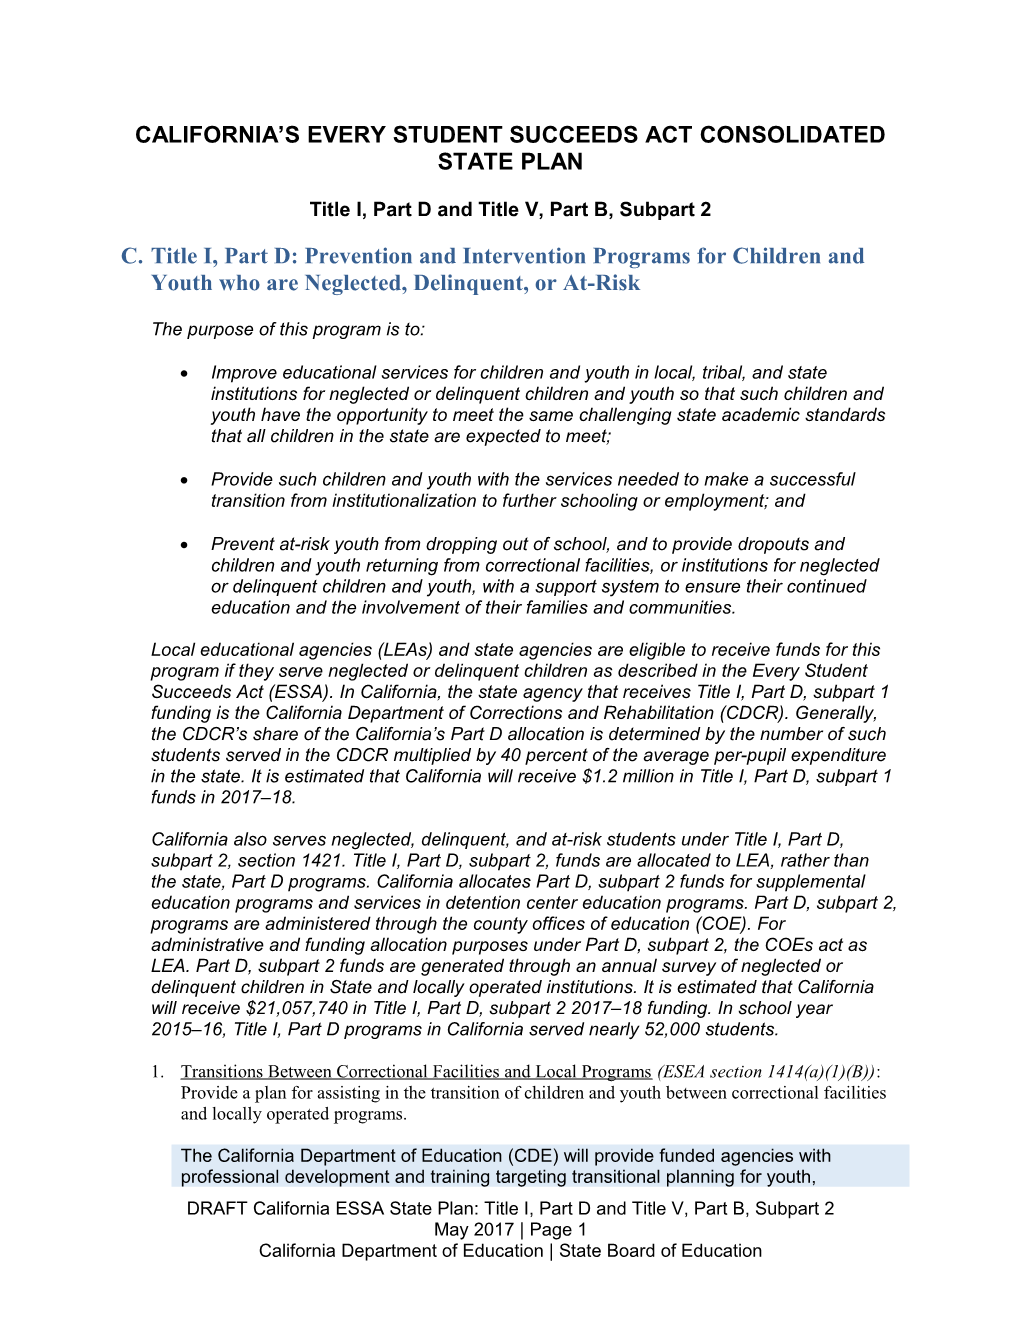 Draft ESSA State Plan Title I, Part D & Title V, Part B - ESSA (CA Dept of Education)